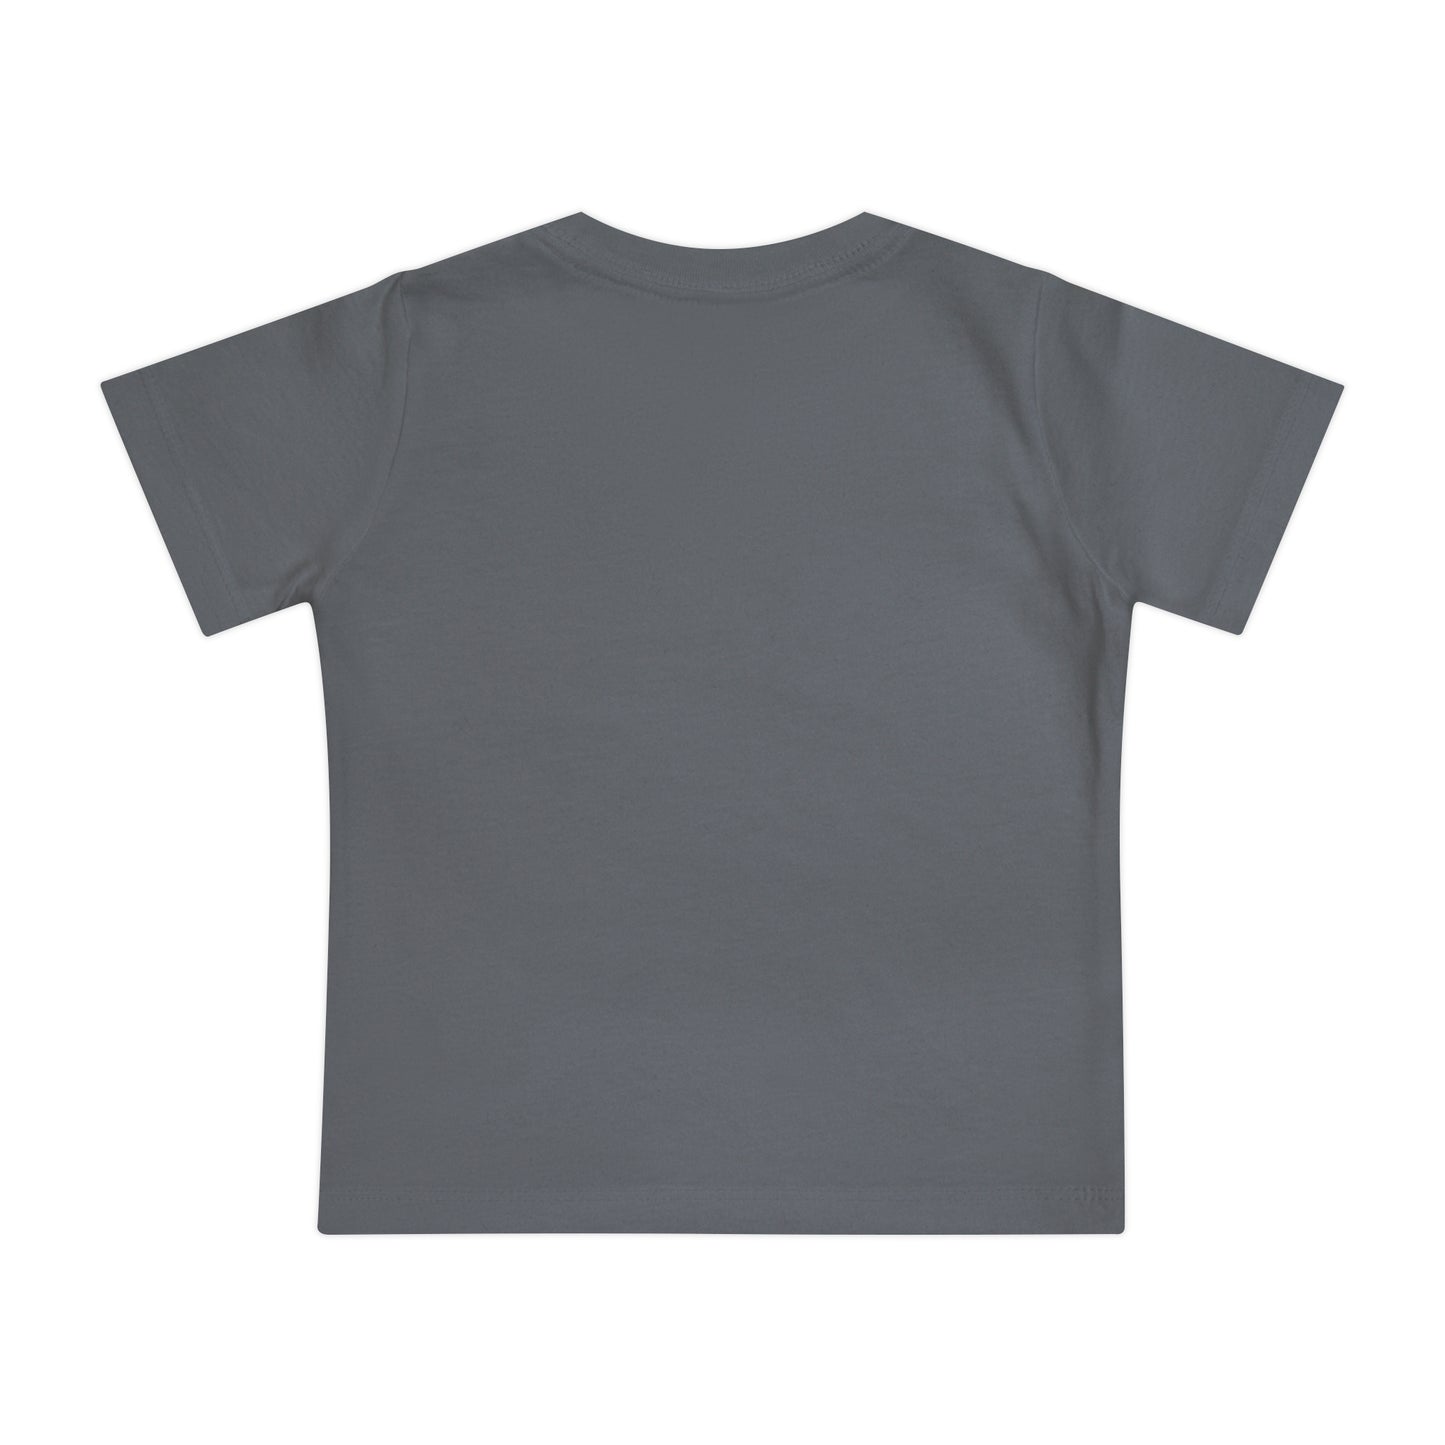 INSPIRED RAISE YOUR STANDARDS Baby Short Sleeve T-Shirt